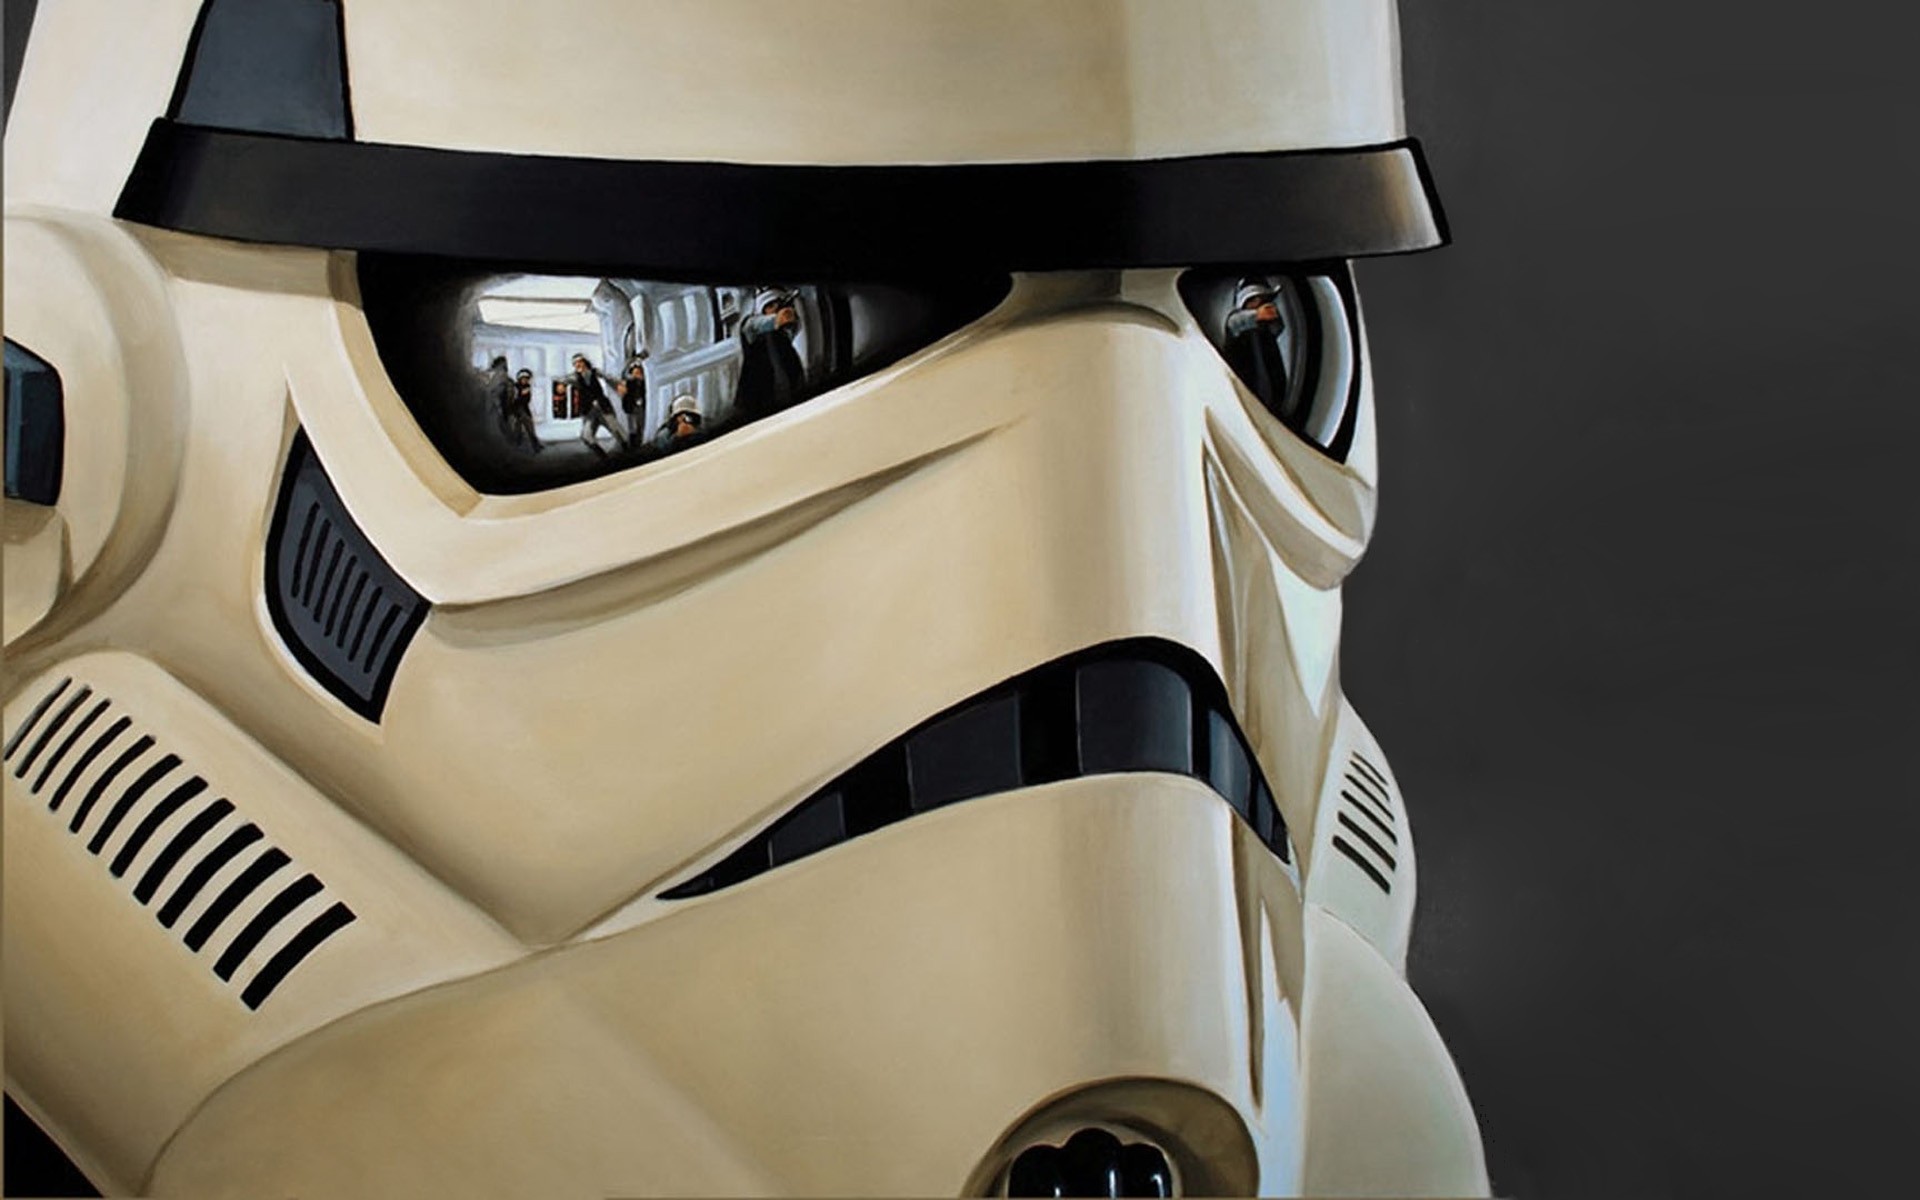 General 1920x1200 Star Wars stormtrooper Trooper movies artwork reflection helmet Galactic Empire Imperial Stormtrooper Imperial Forces digital art closeup